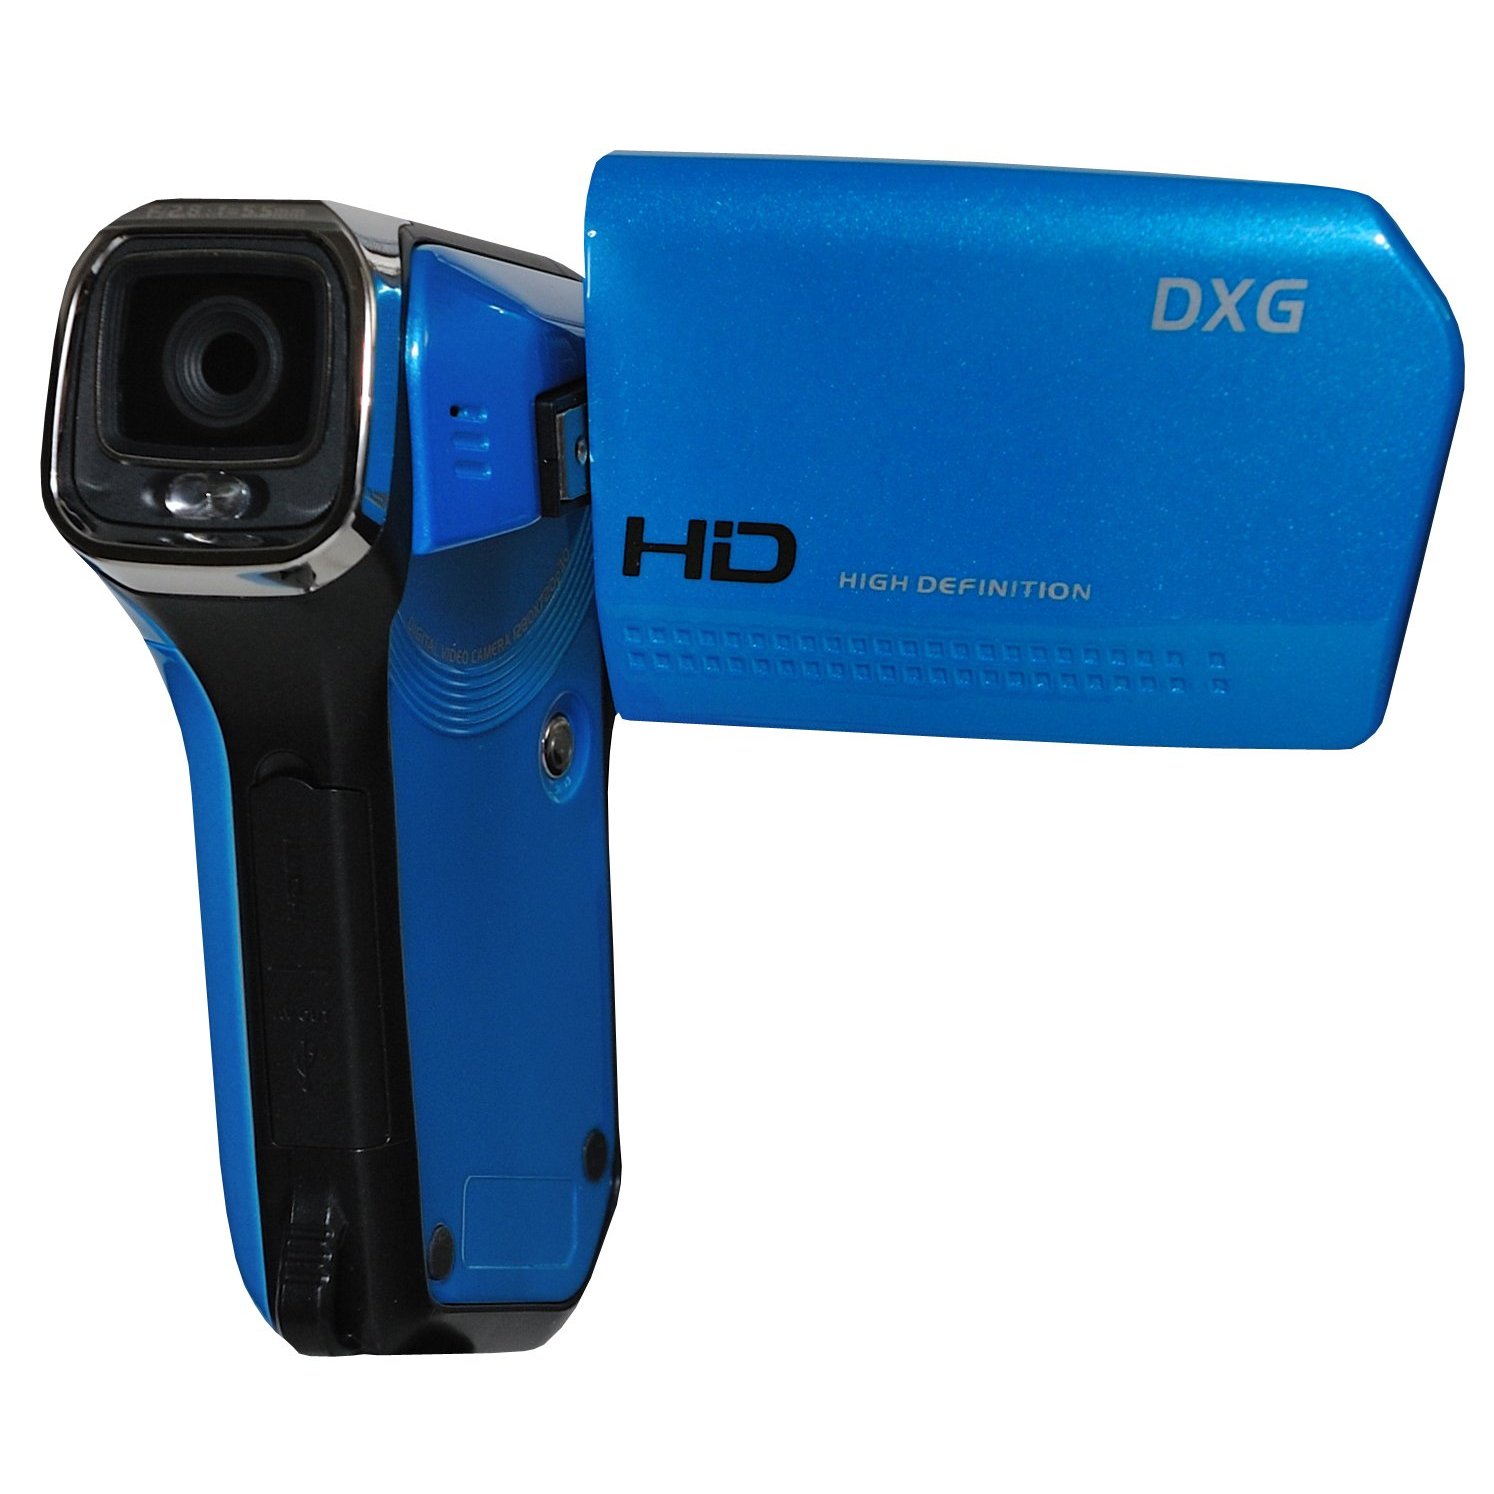 http://thetechjournal.com/wp-content/uploads/images/1110/1319508862-dxg-usa-dxg5b6vb-hd-dxg-quickshots-720p-hd-mini-camcorder-2.jpg